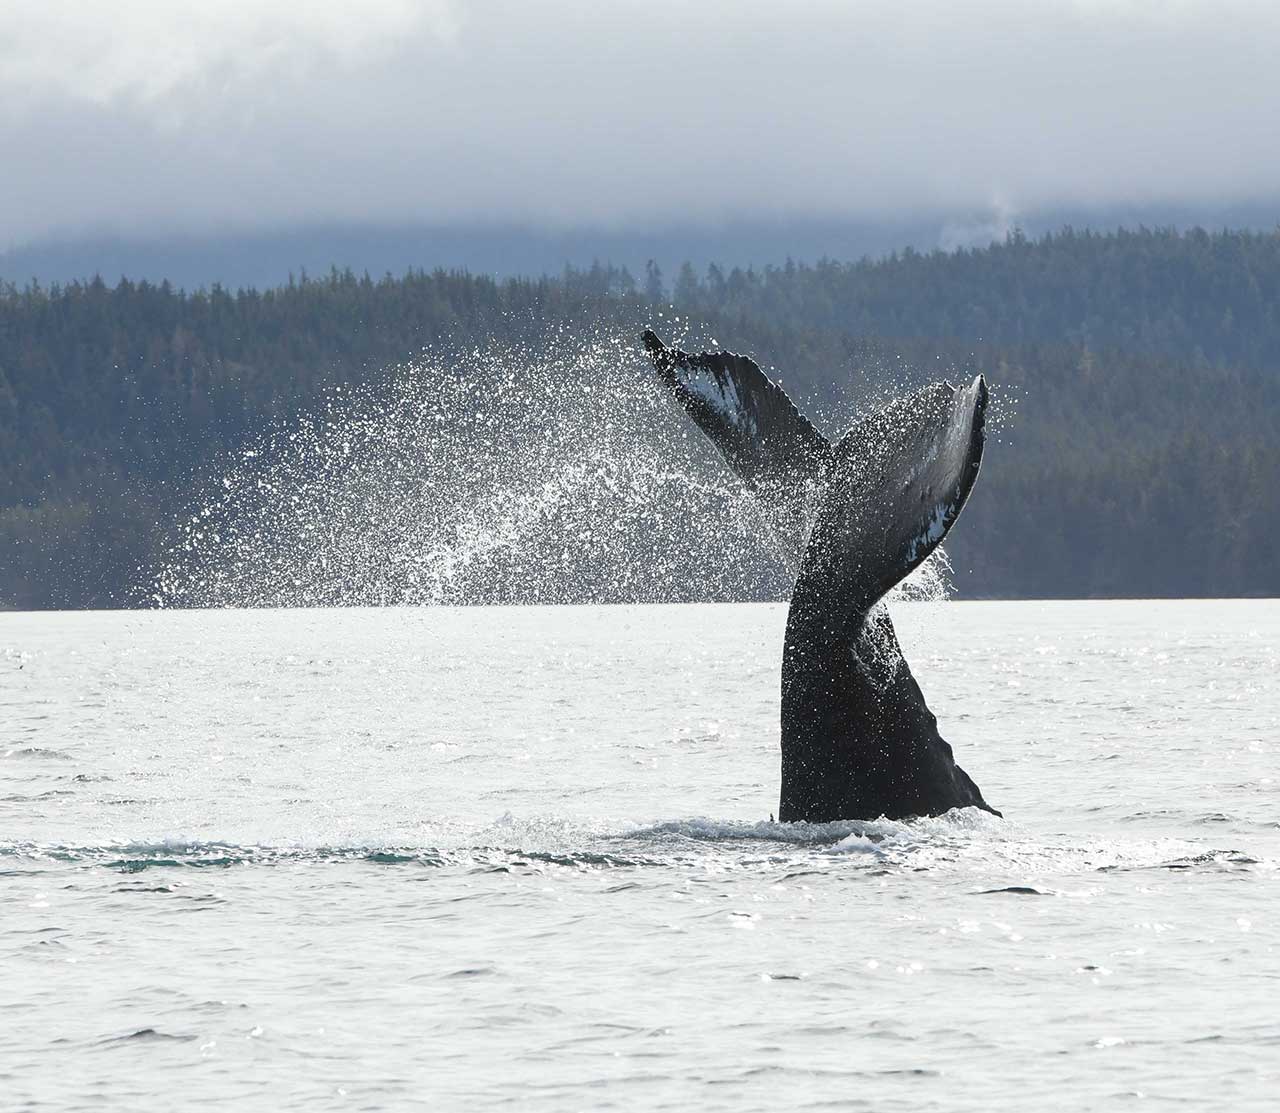 mers marine education research society whale argonaut tail lobbing